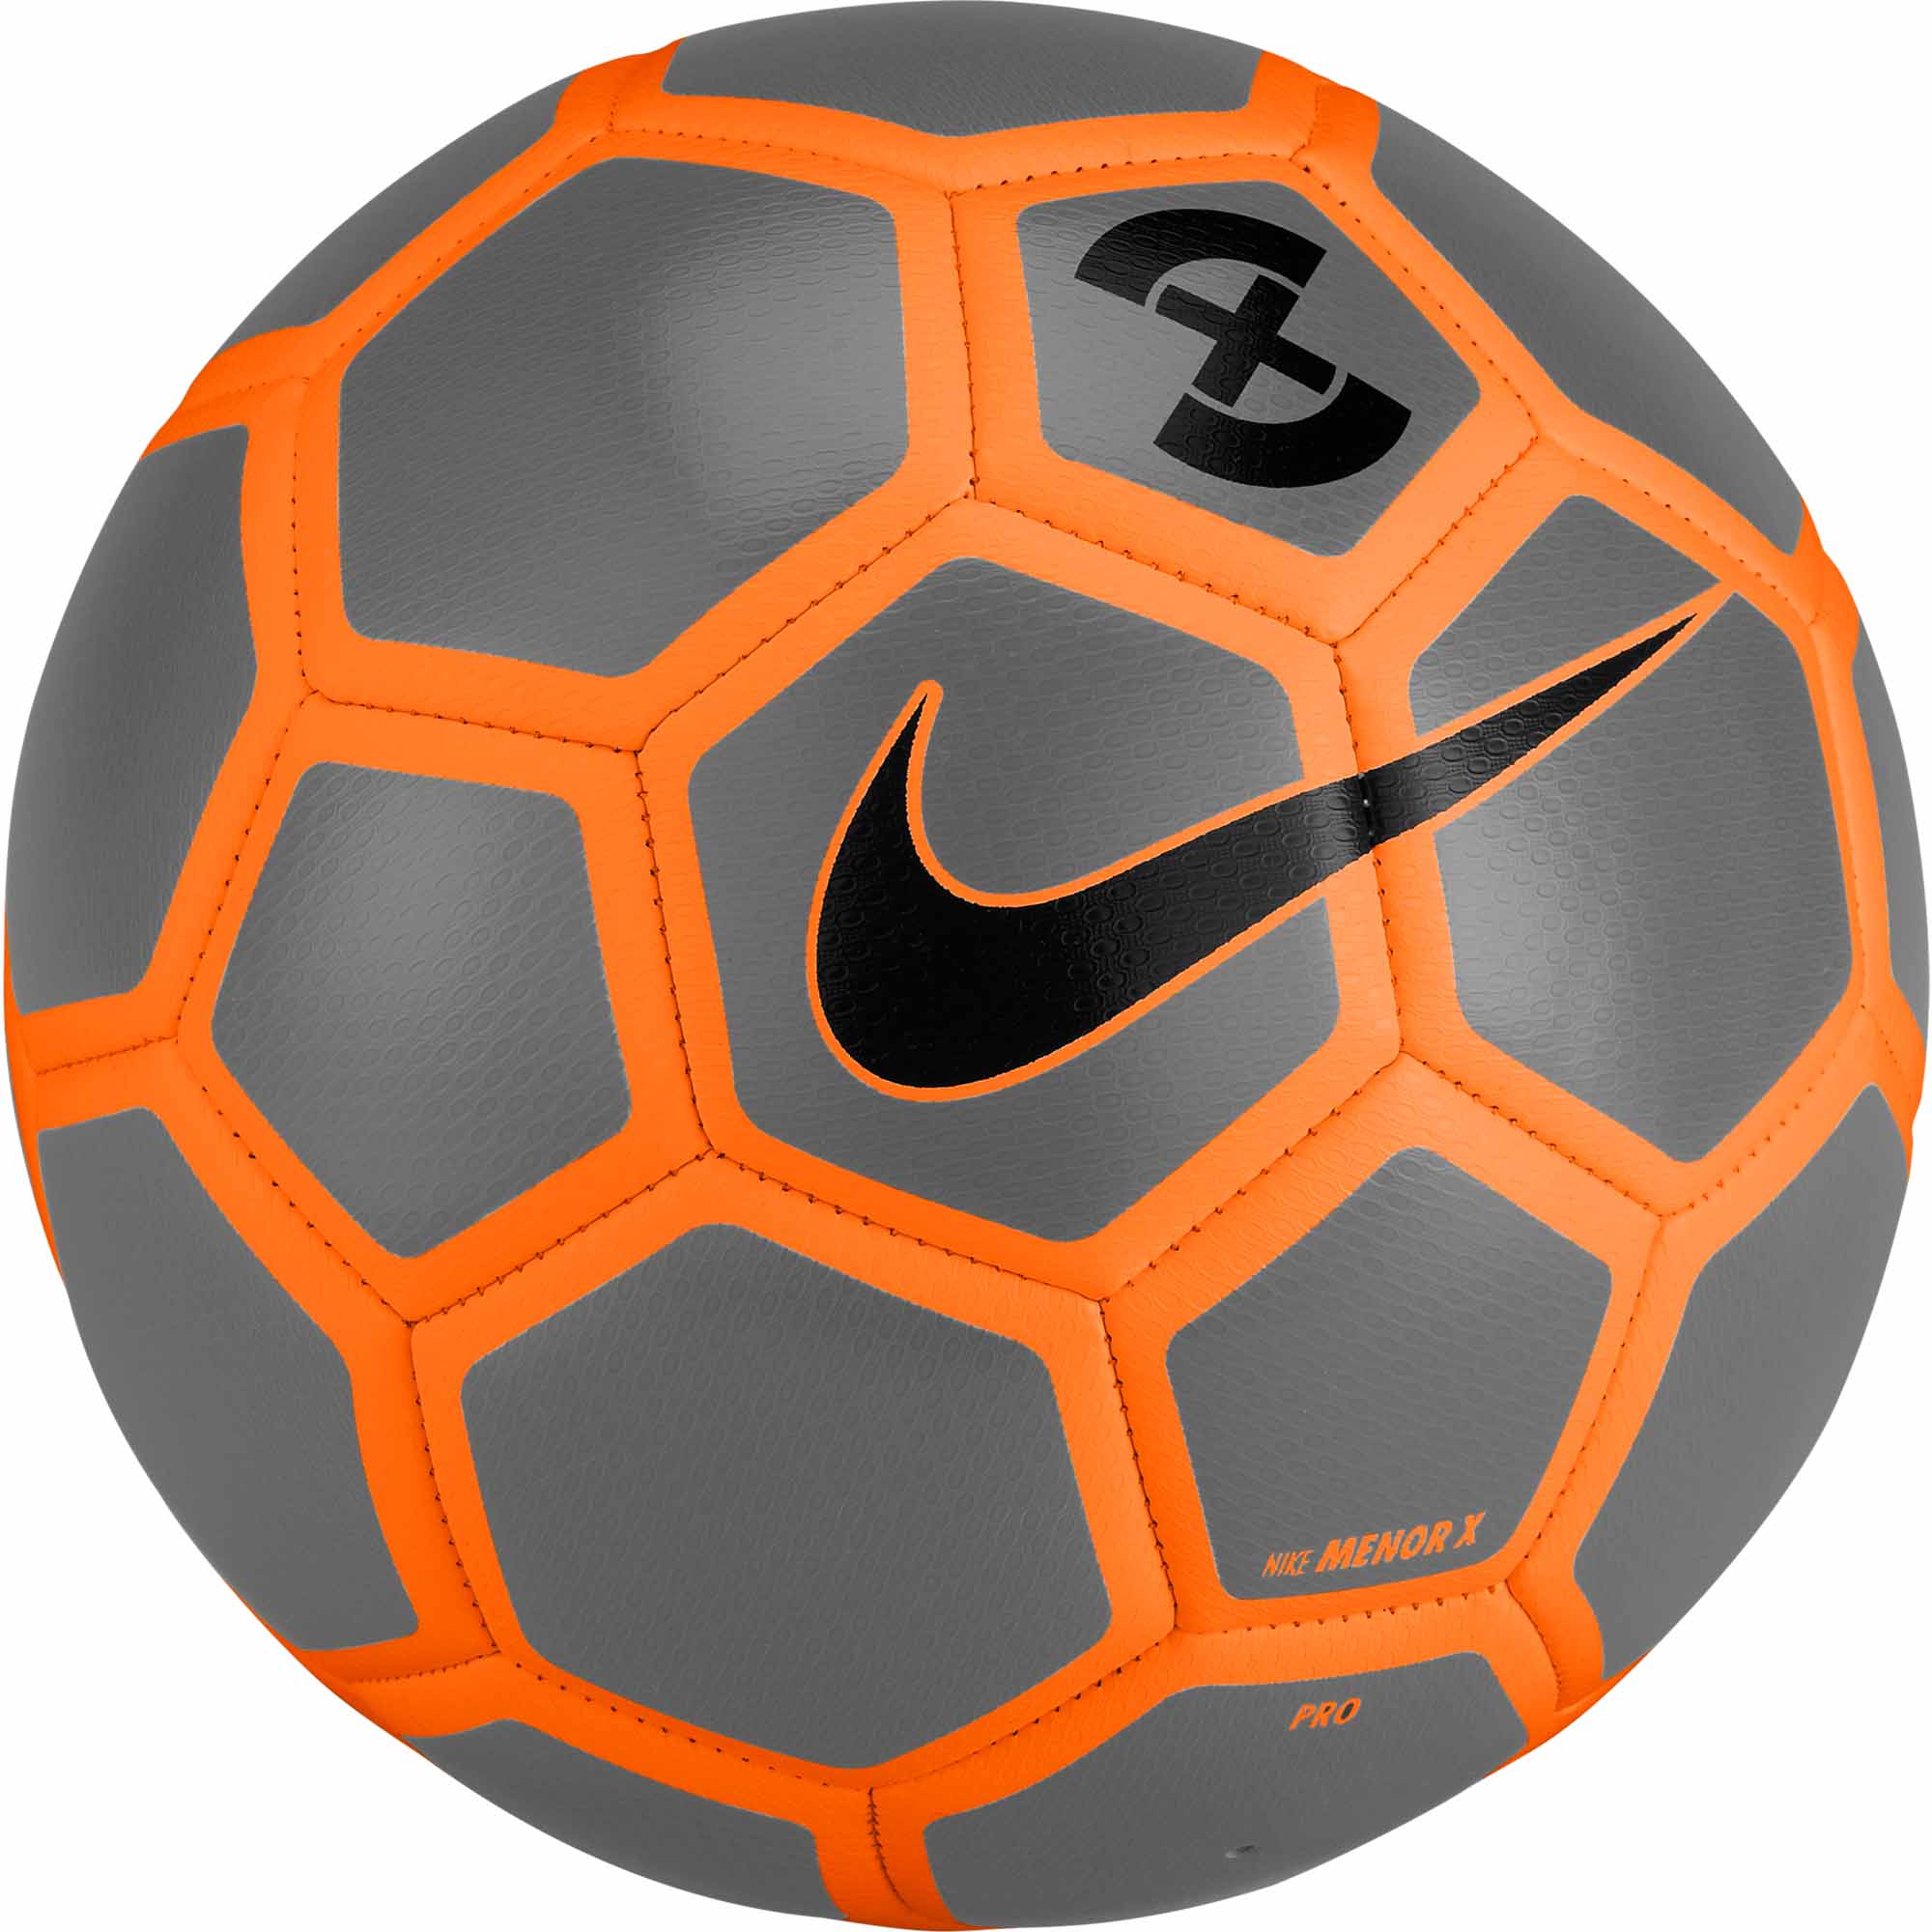 Nike Menor X Futsal Ball - Grey Nike Soccer Balls